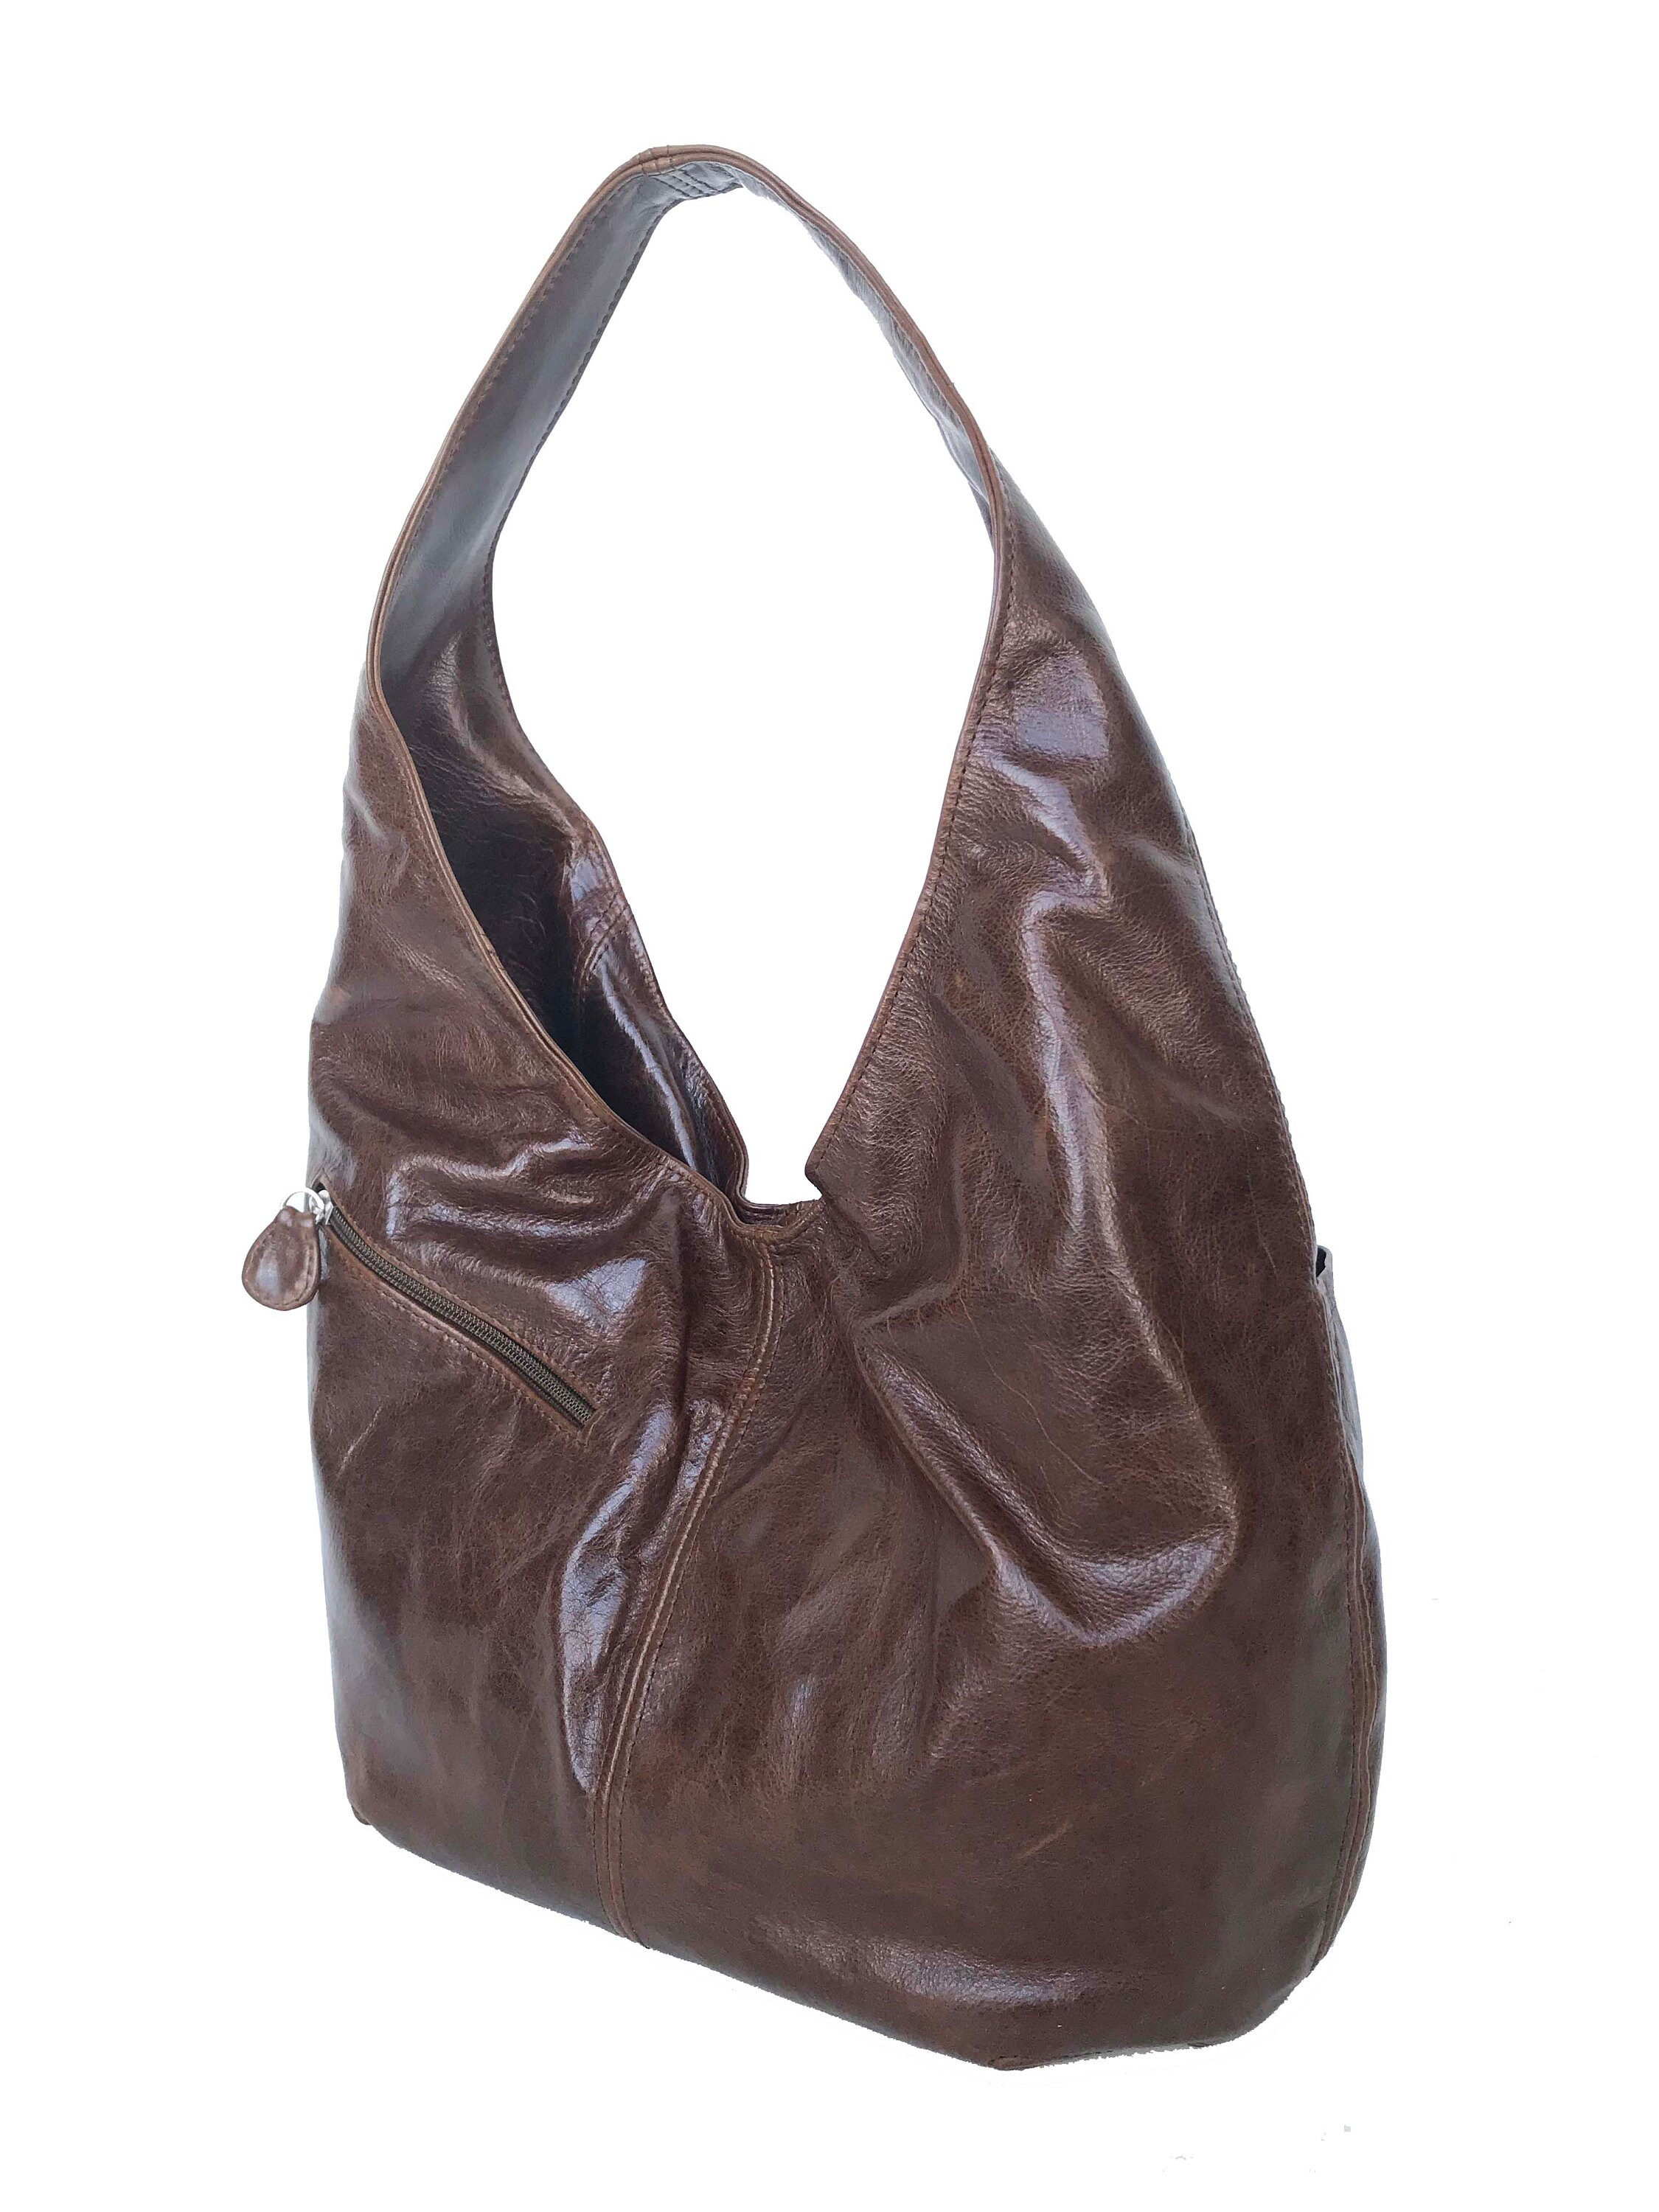 Distressed Brown Leather Hobo Bag for Women Handmade Handbags | Etsy